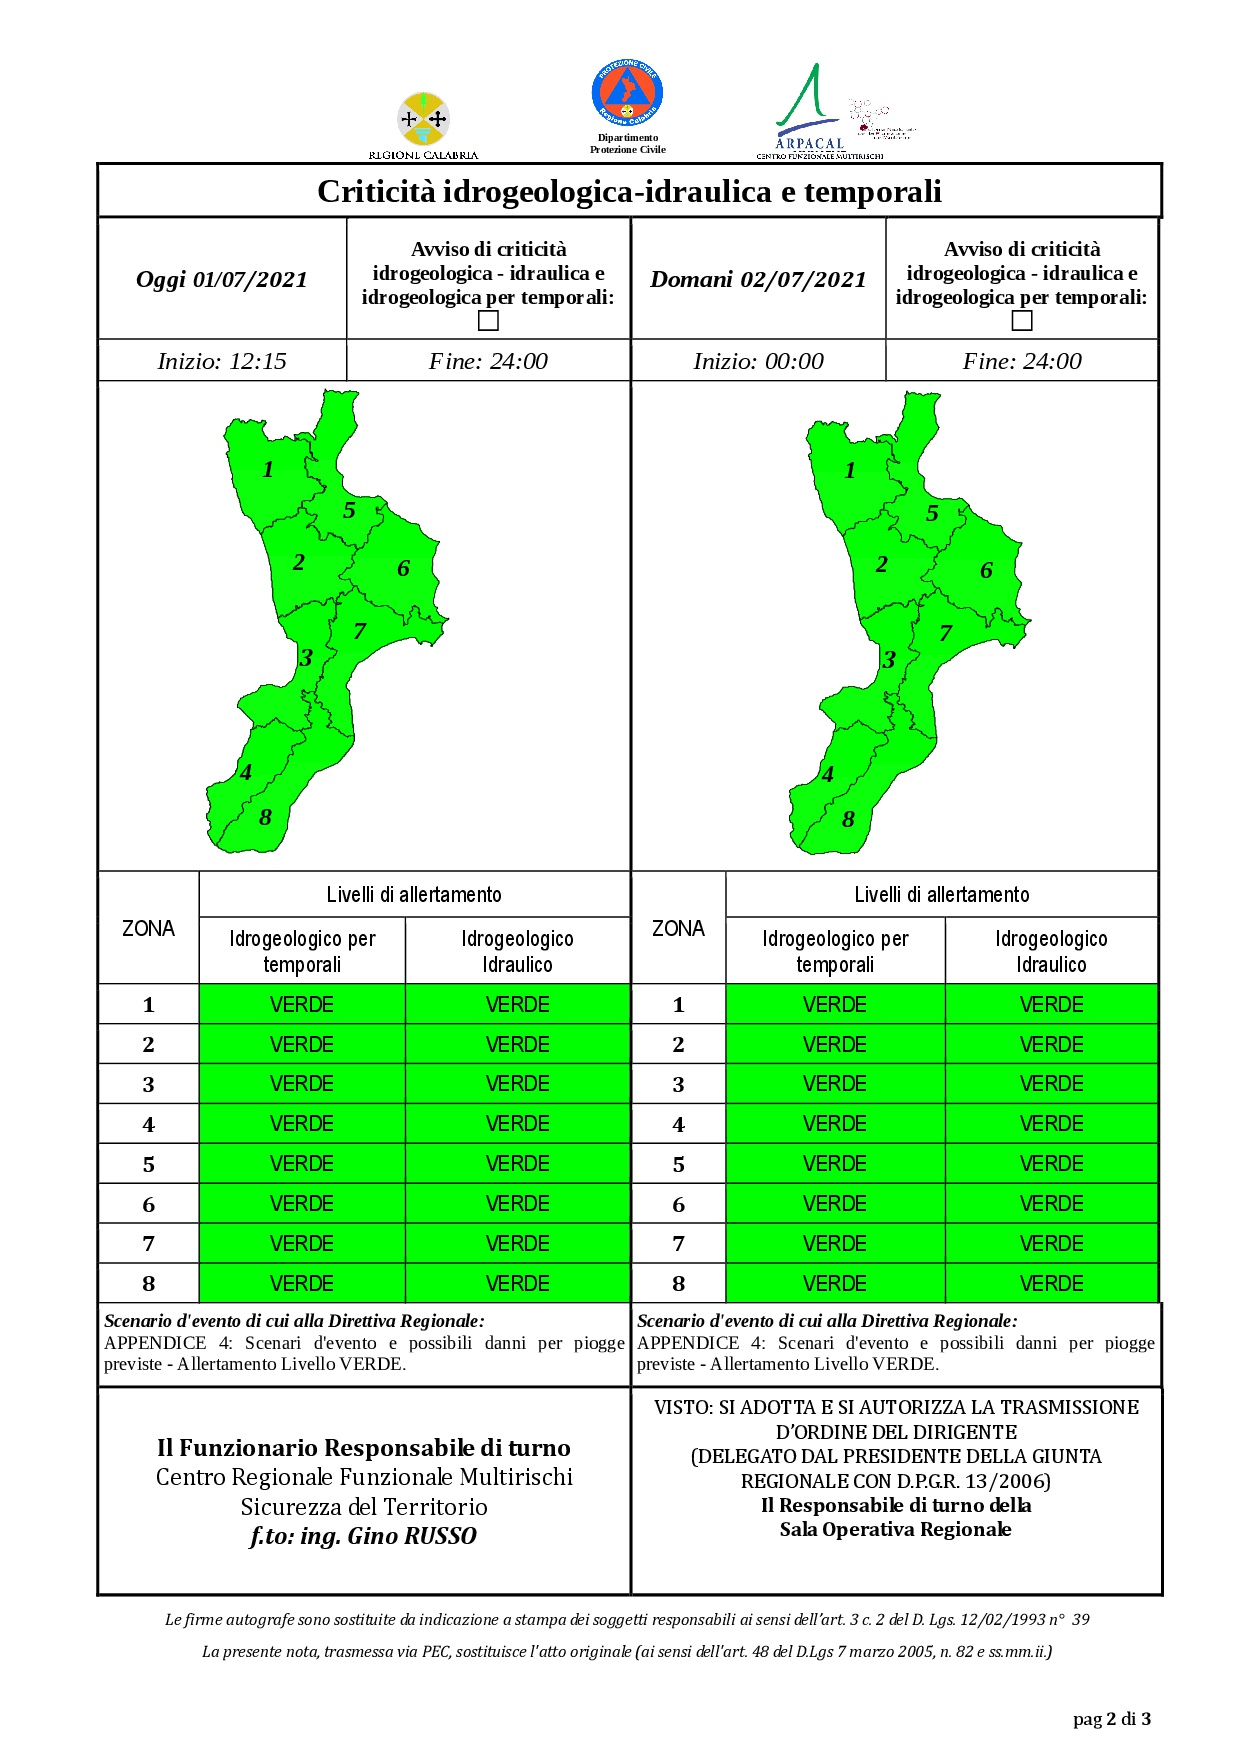 Criticità idrogeologica-idraulica e temporali in Calabria 01-07-2021